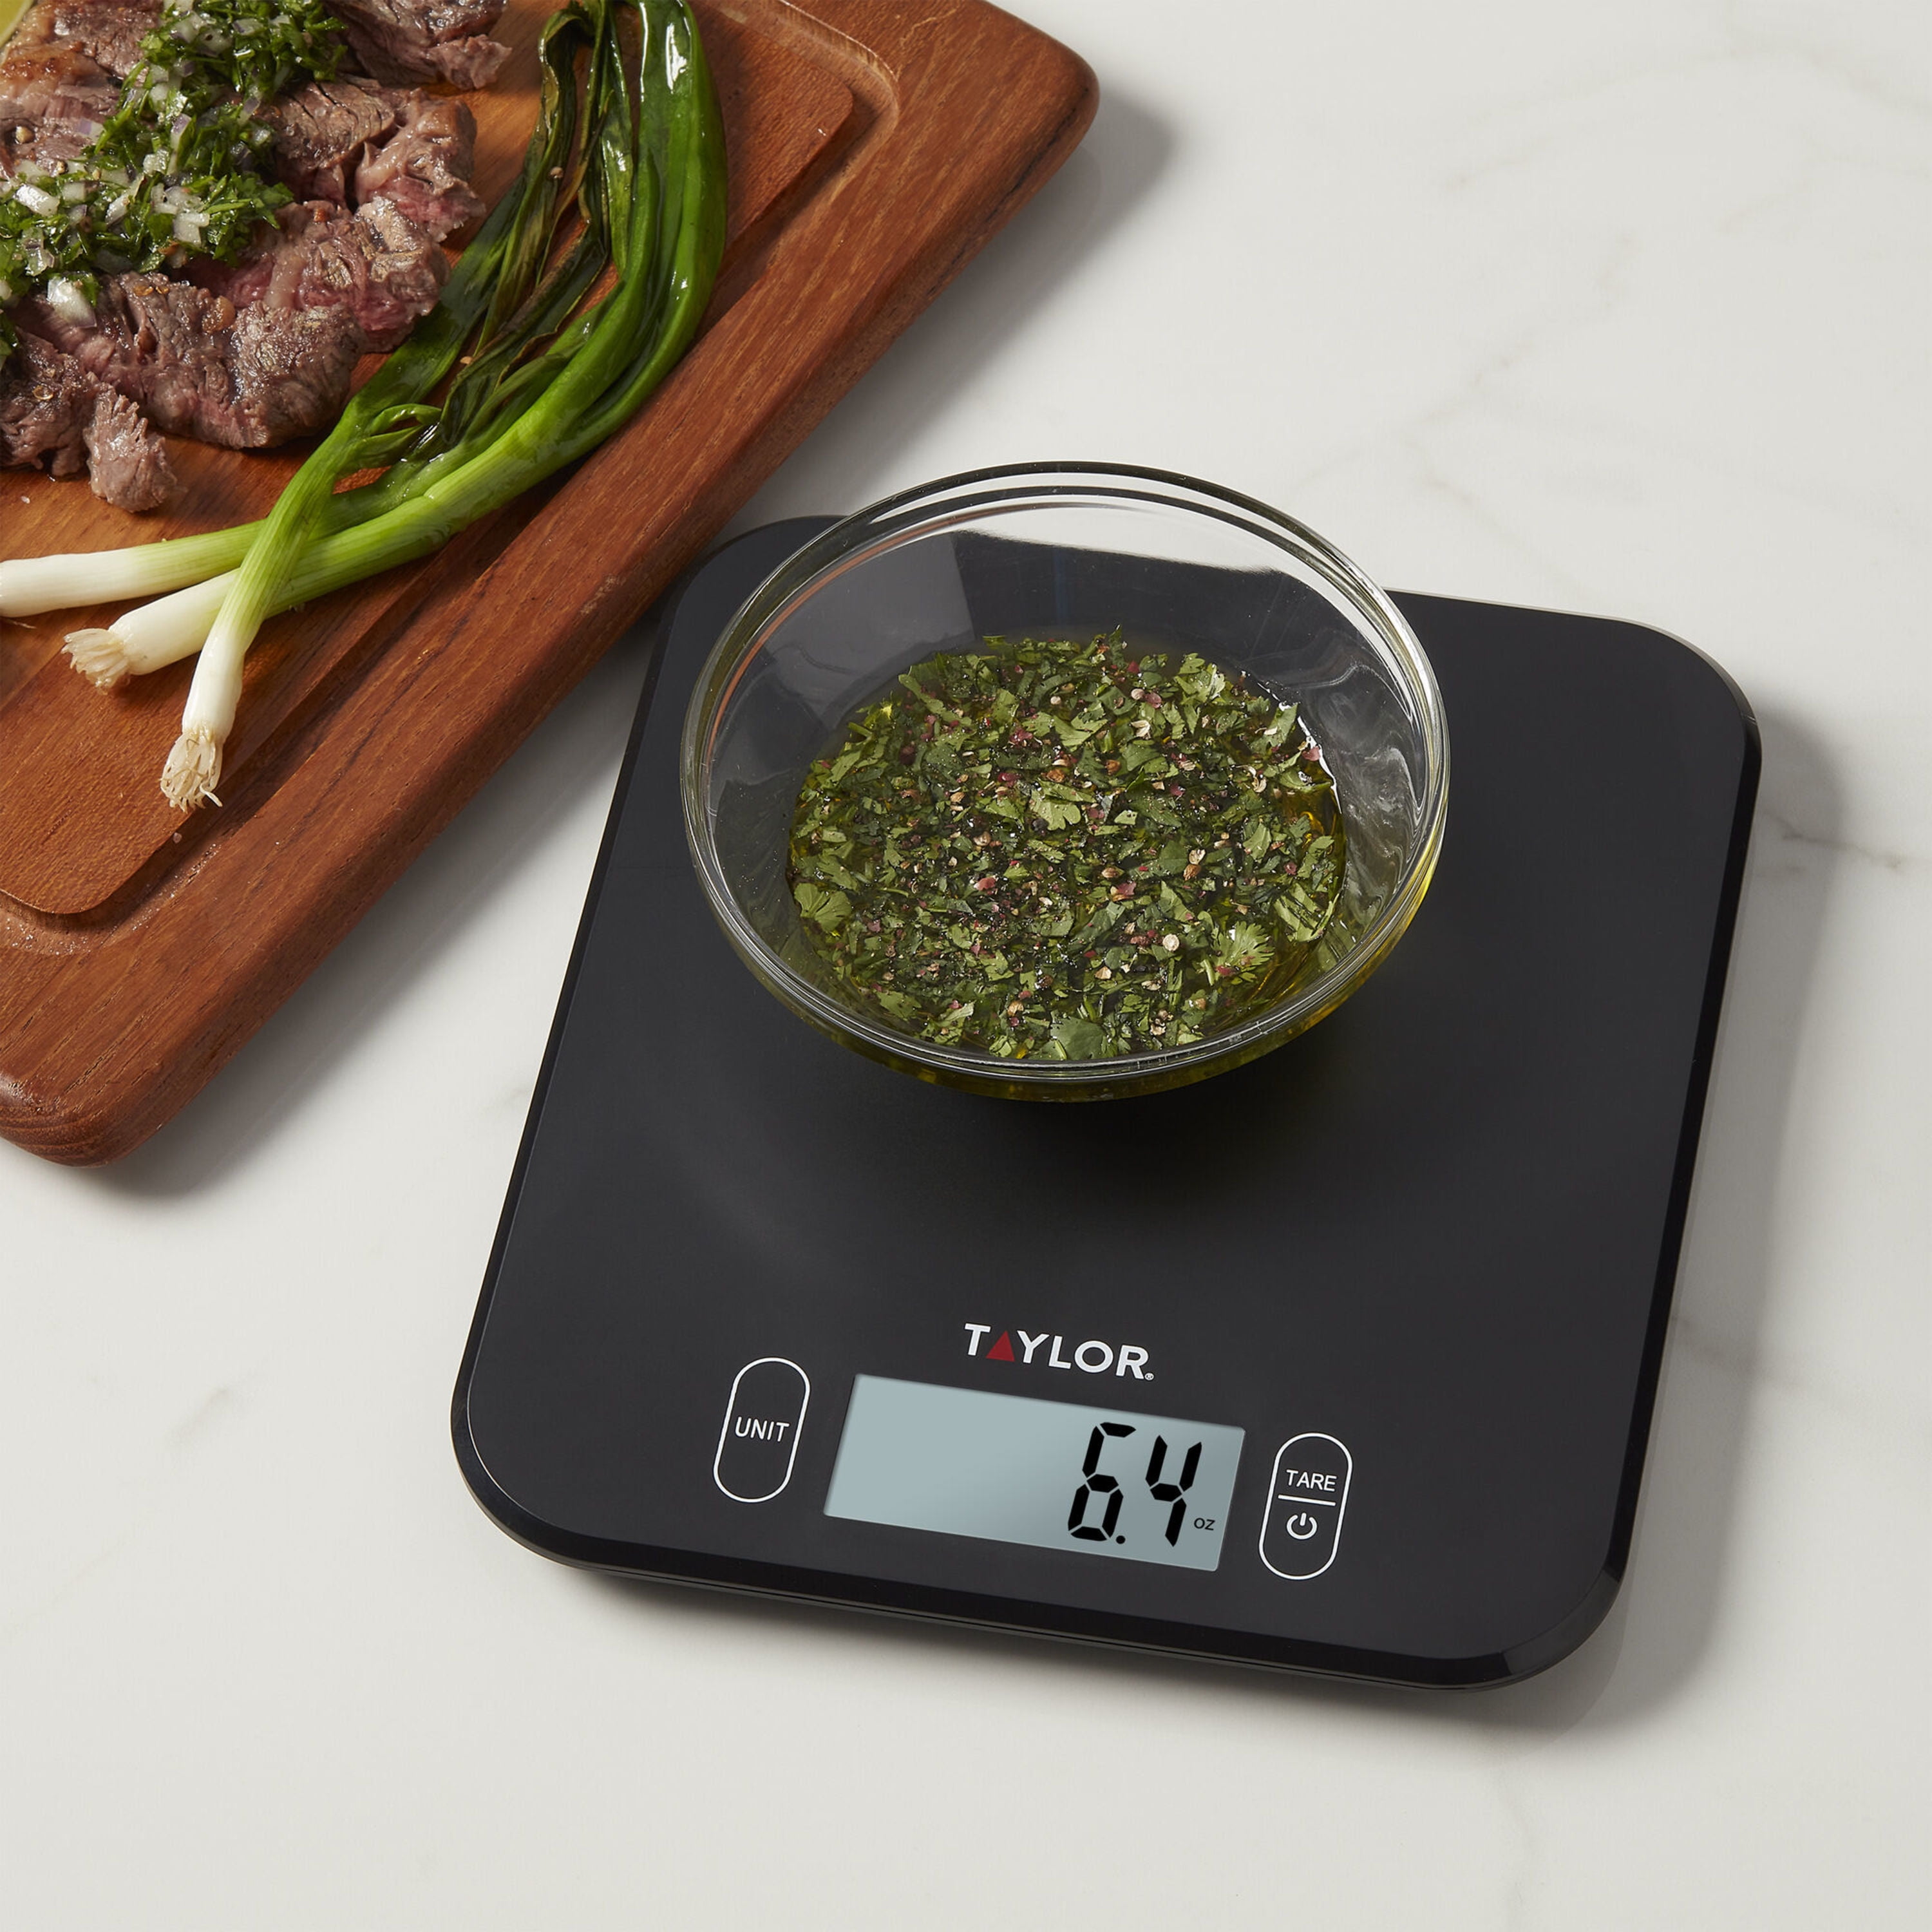 Taylor Digital Kitchen Glass Top 11lb Food Scale Black : Target